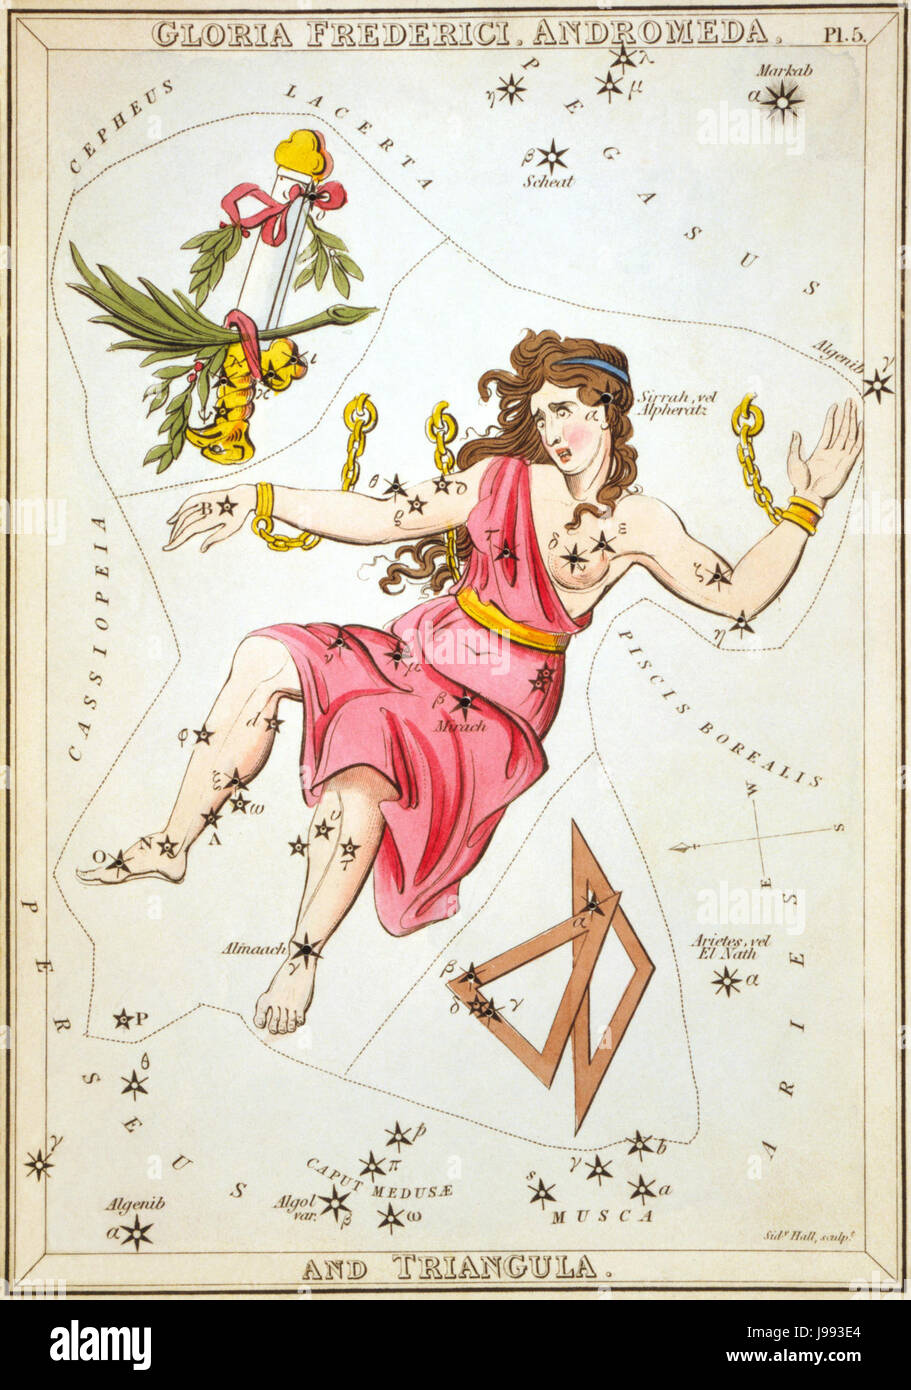 Urania's Mirror Hall Sidney Gloria Frederici, Andromeda, et Triangula Banque D'Images